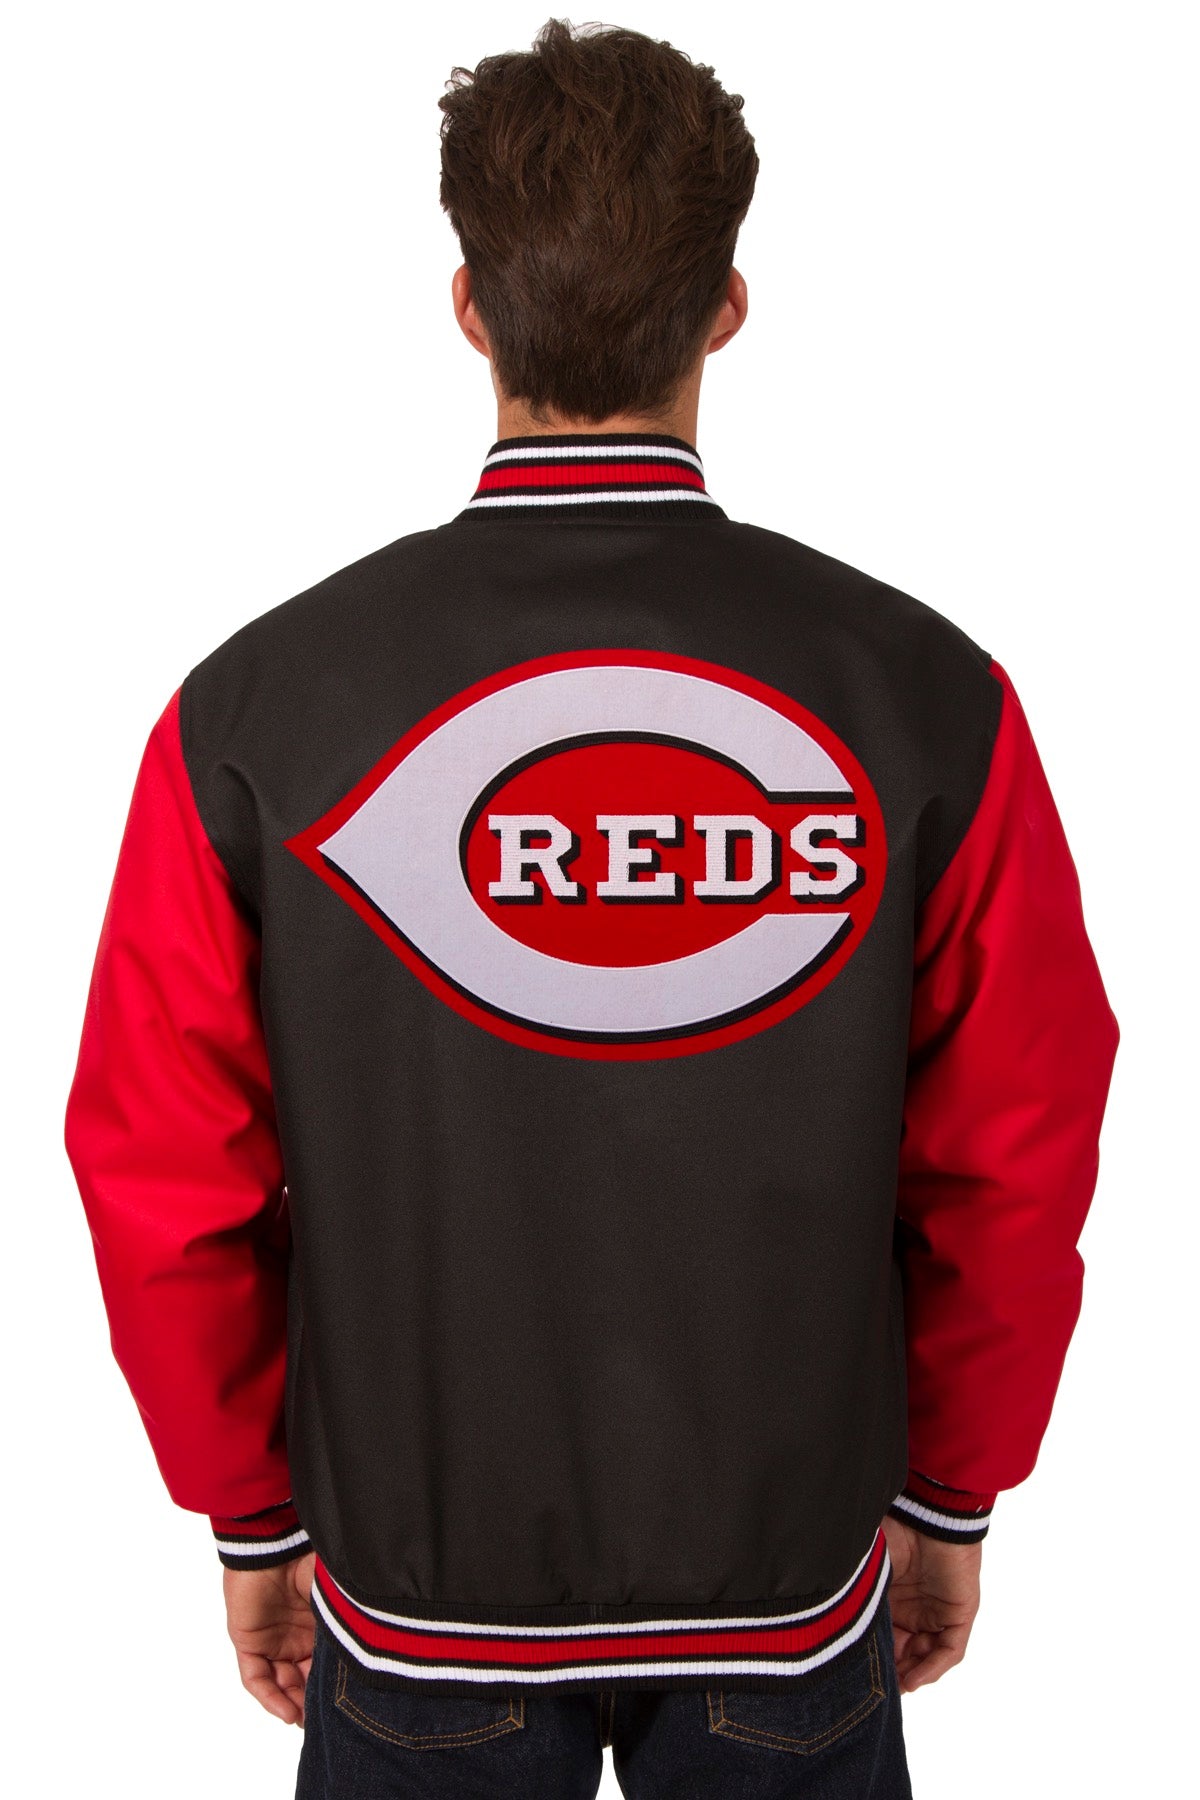 Cincinnati Reds Poly-Twill Jacket